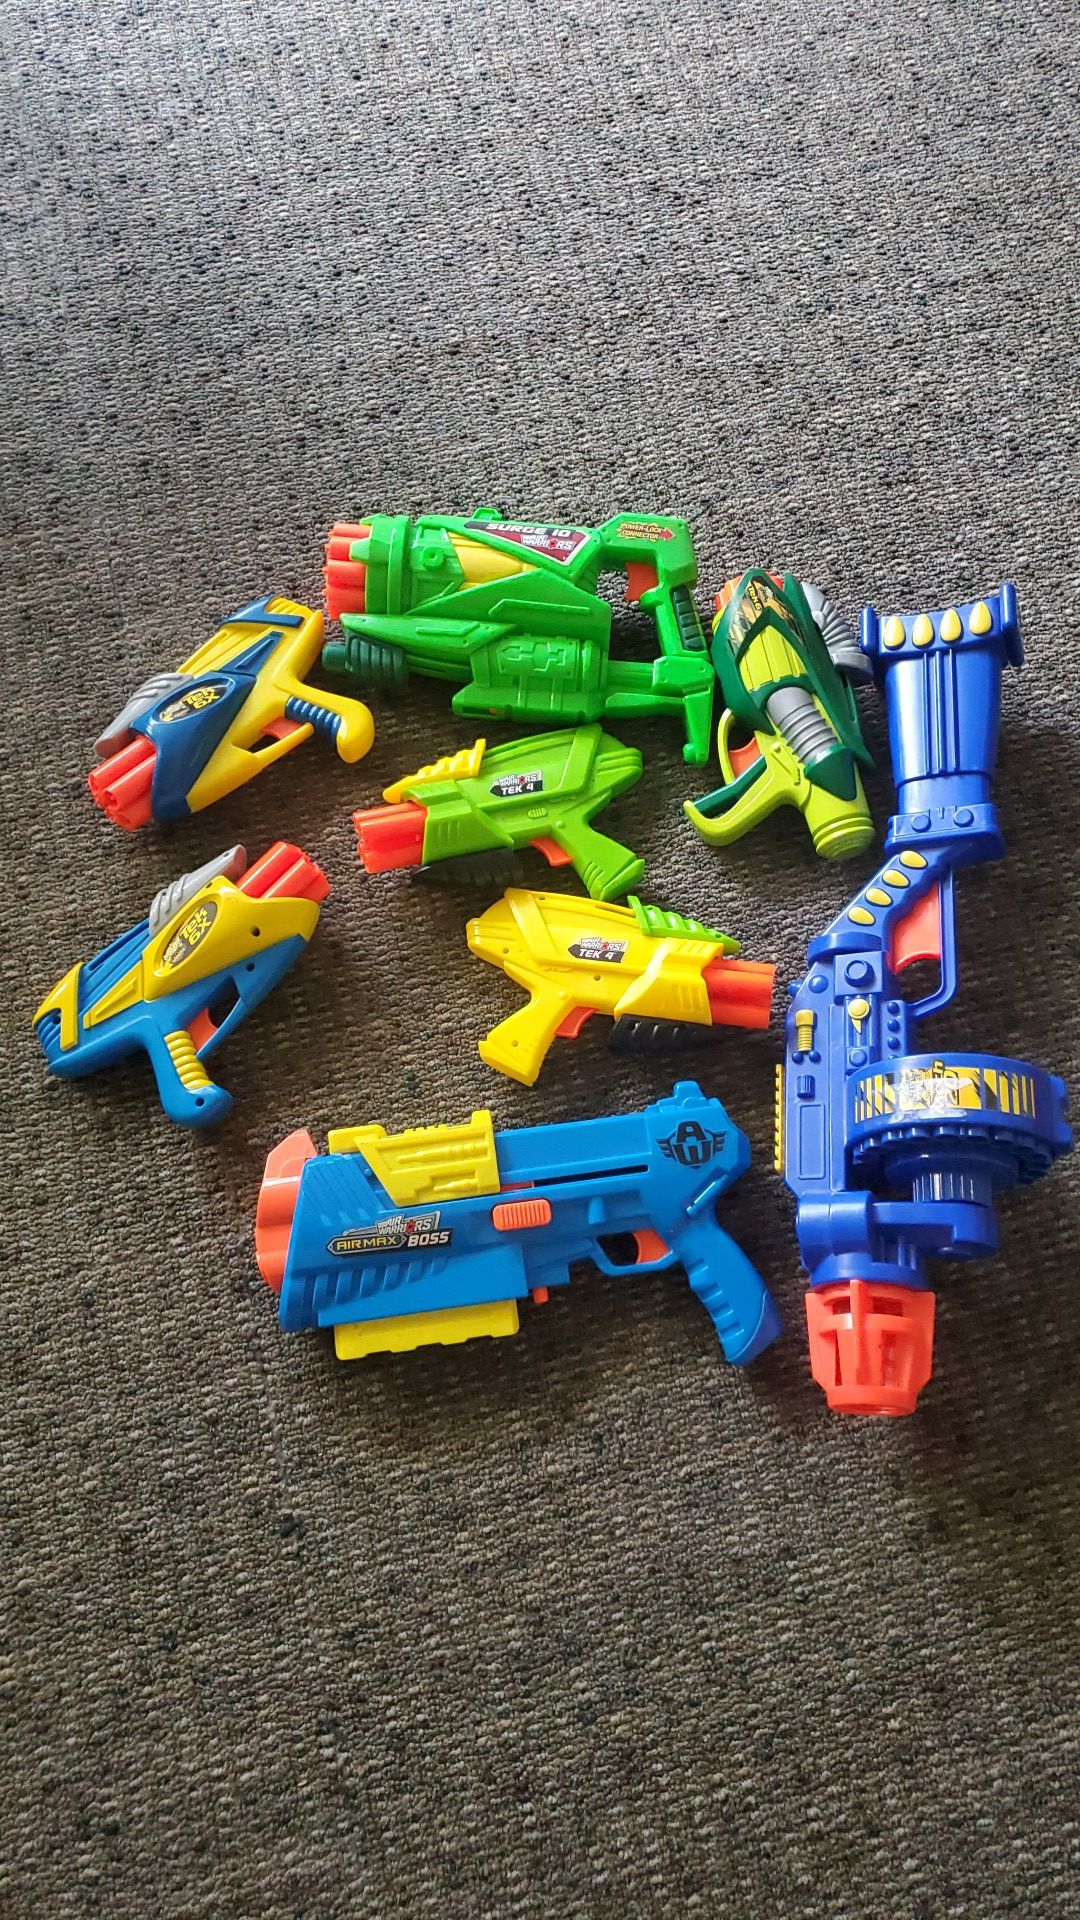 Bunch of nerf guns